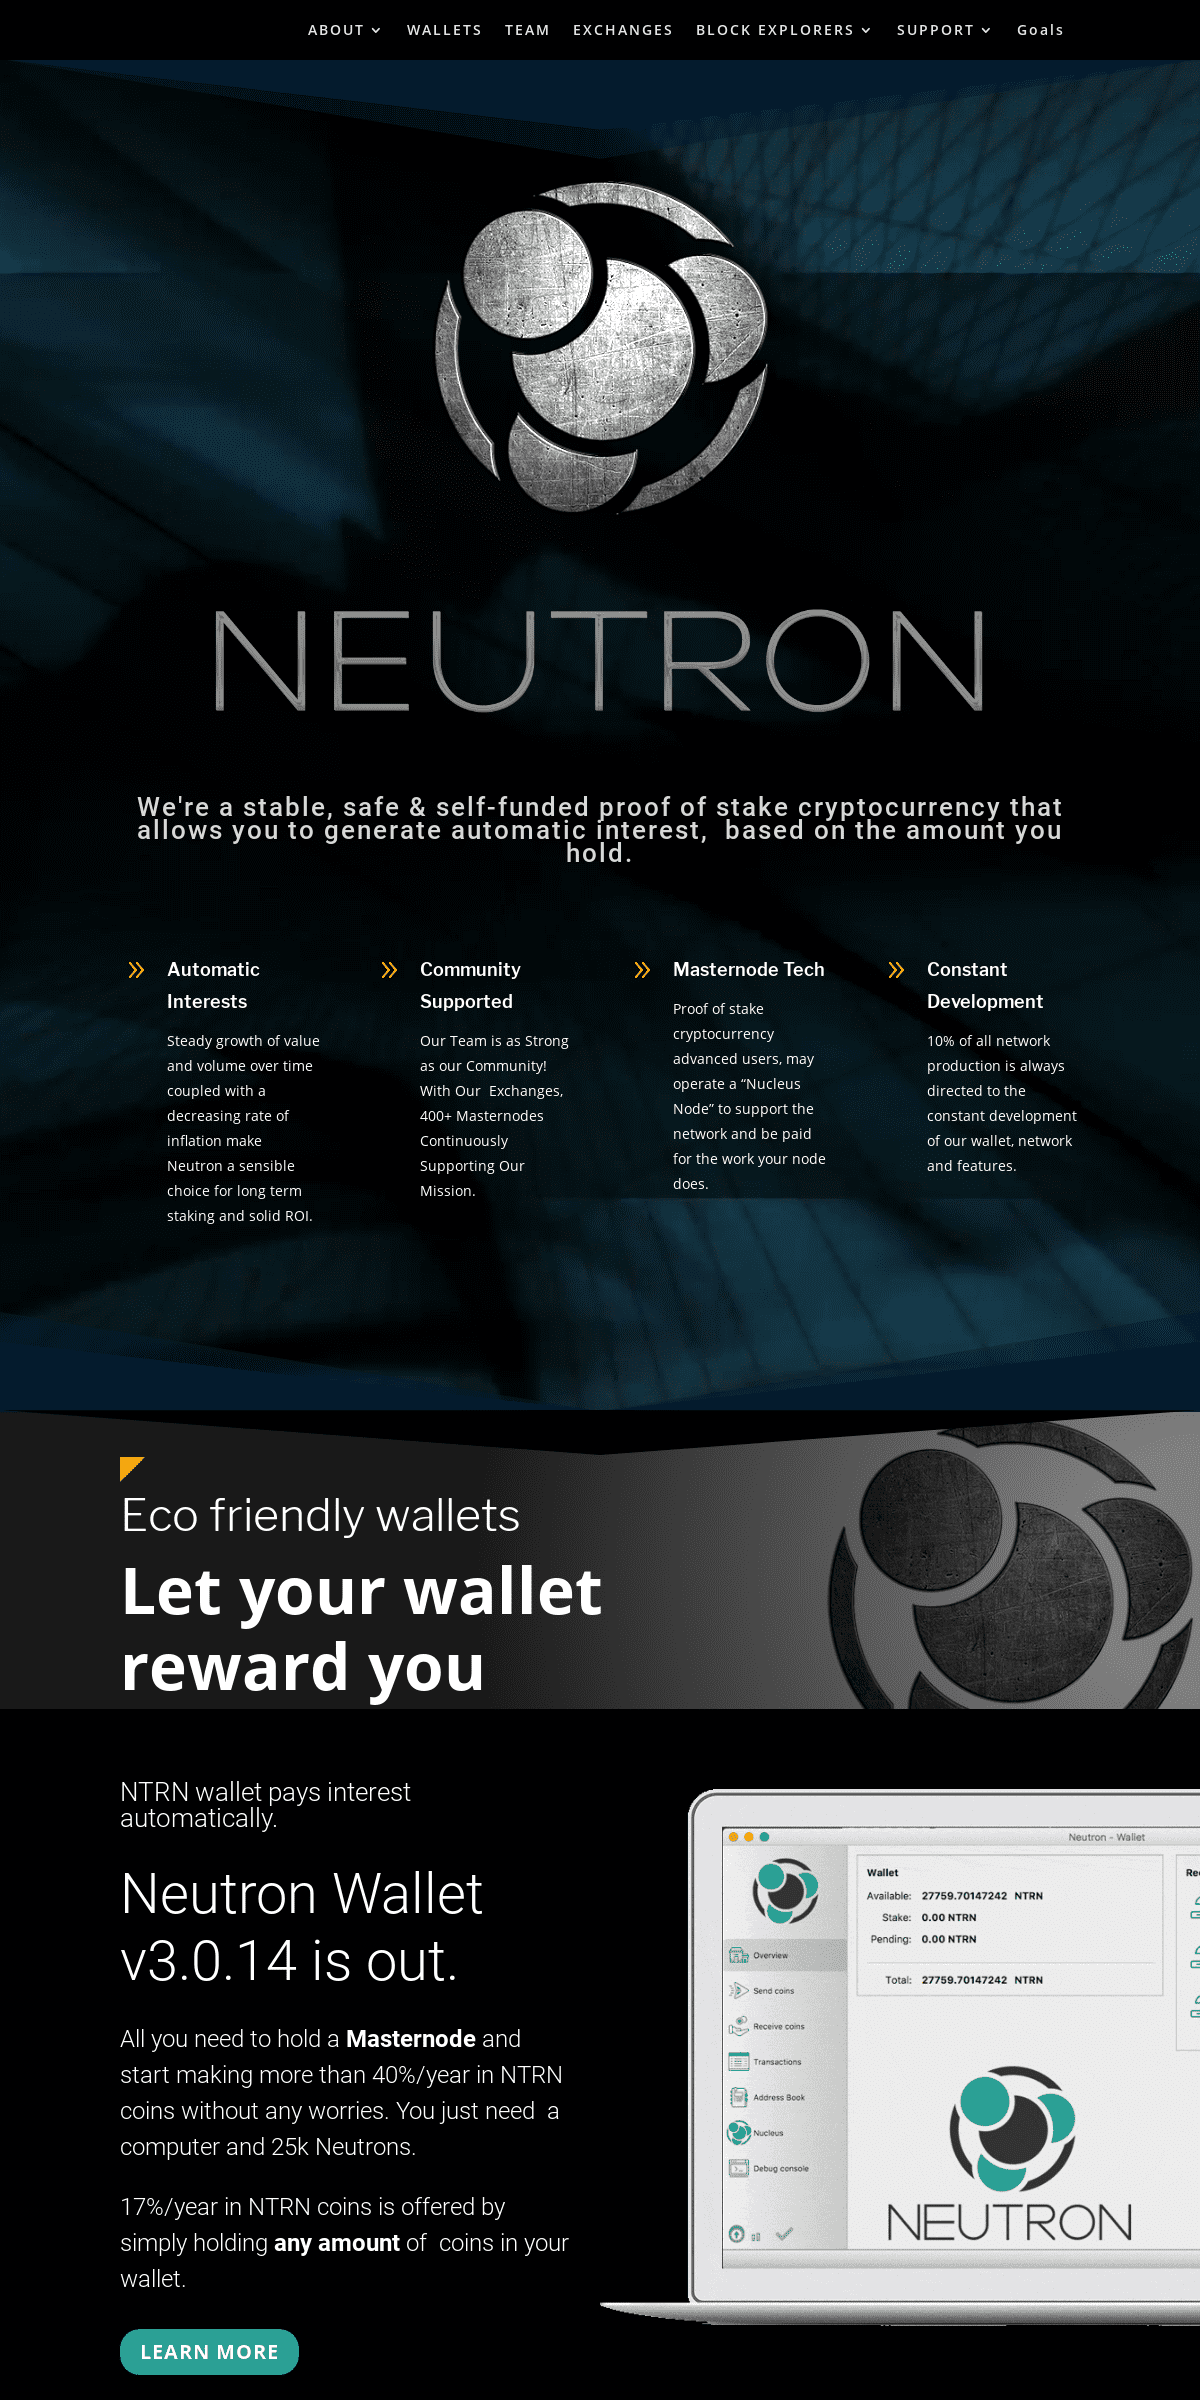 A complete backup of neutroncoin.com